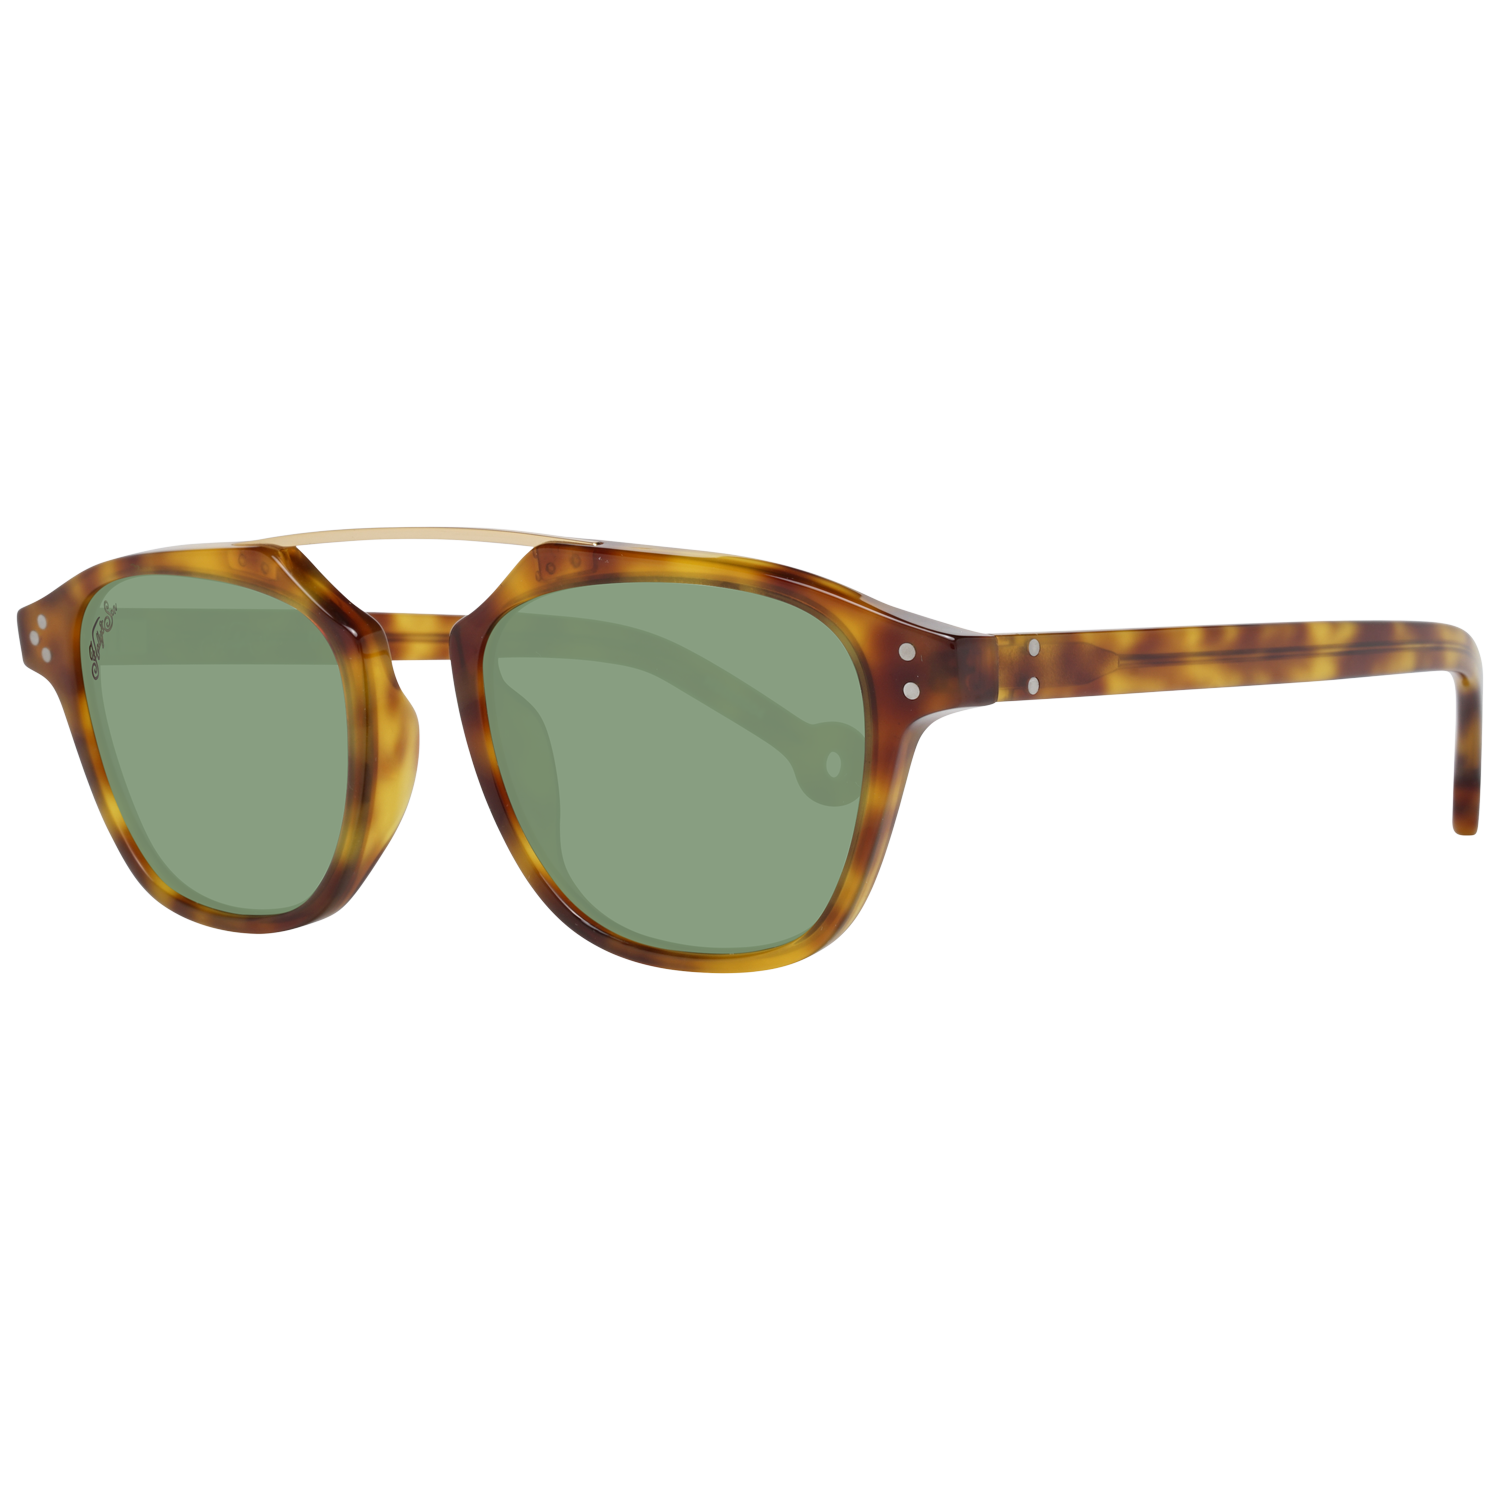 Hally & Son Sunglasses Hally & Son Sunglasses HS666S 04 50 Eyeglasses Eyewear UK USA Australia 